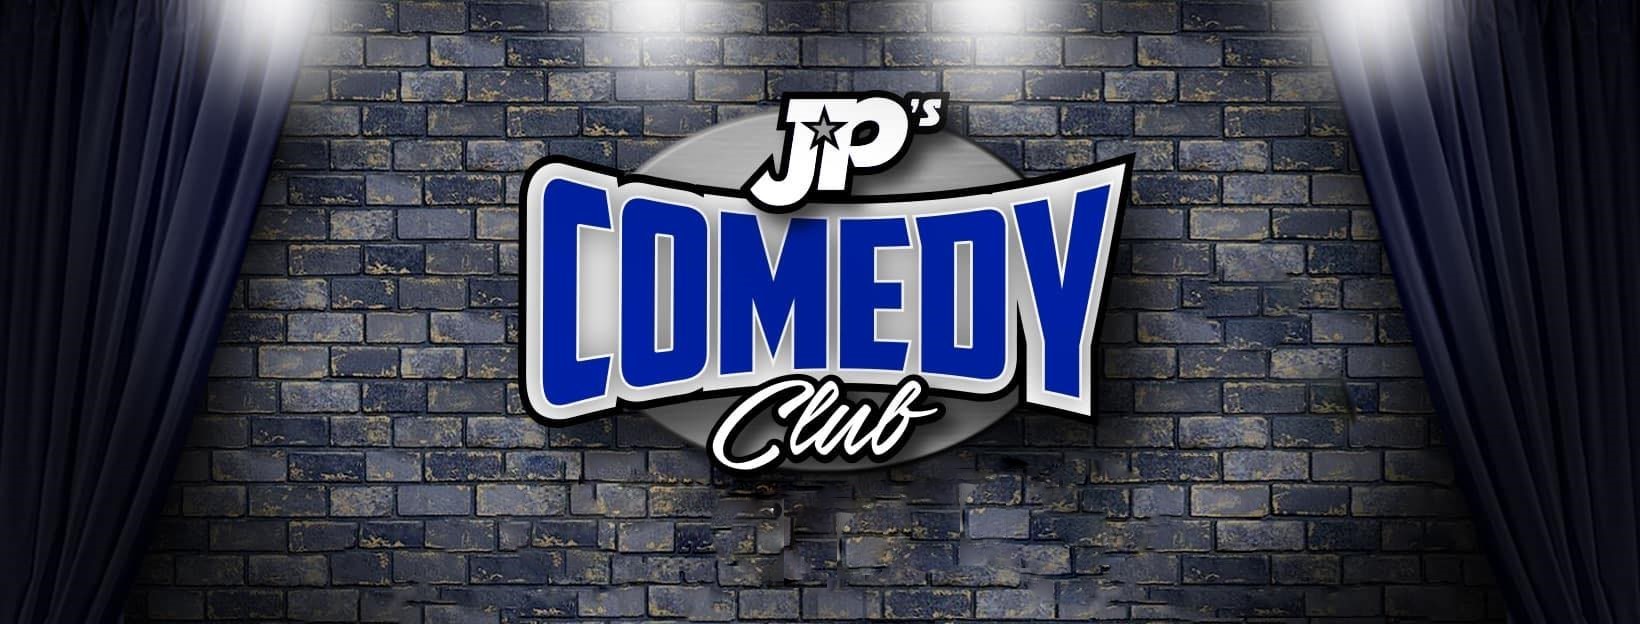 FREE Comedy Shows- Thursday, Friday and Saturday (4/1, 4/2 and 4/3) in Gilbert, AZ @ JPs Comedy Club, Maricopa, Arizona, United States